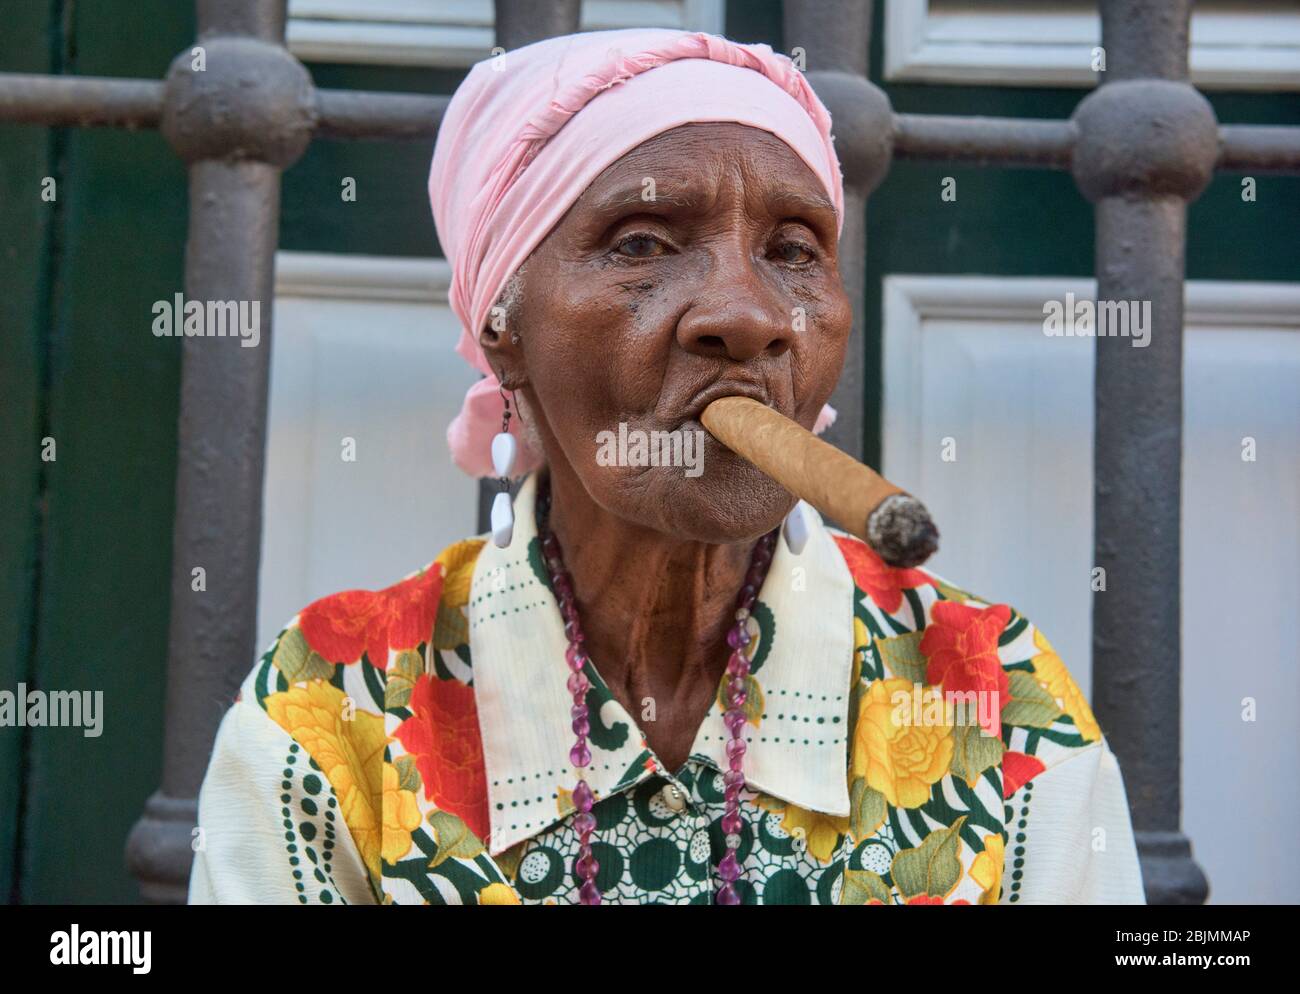 foran Luksus licens Donna che fuma un sigaro, l'Avana, Cuba Foto stock - Alamy